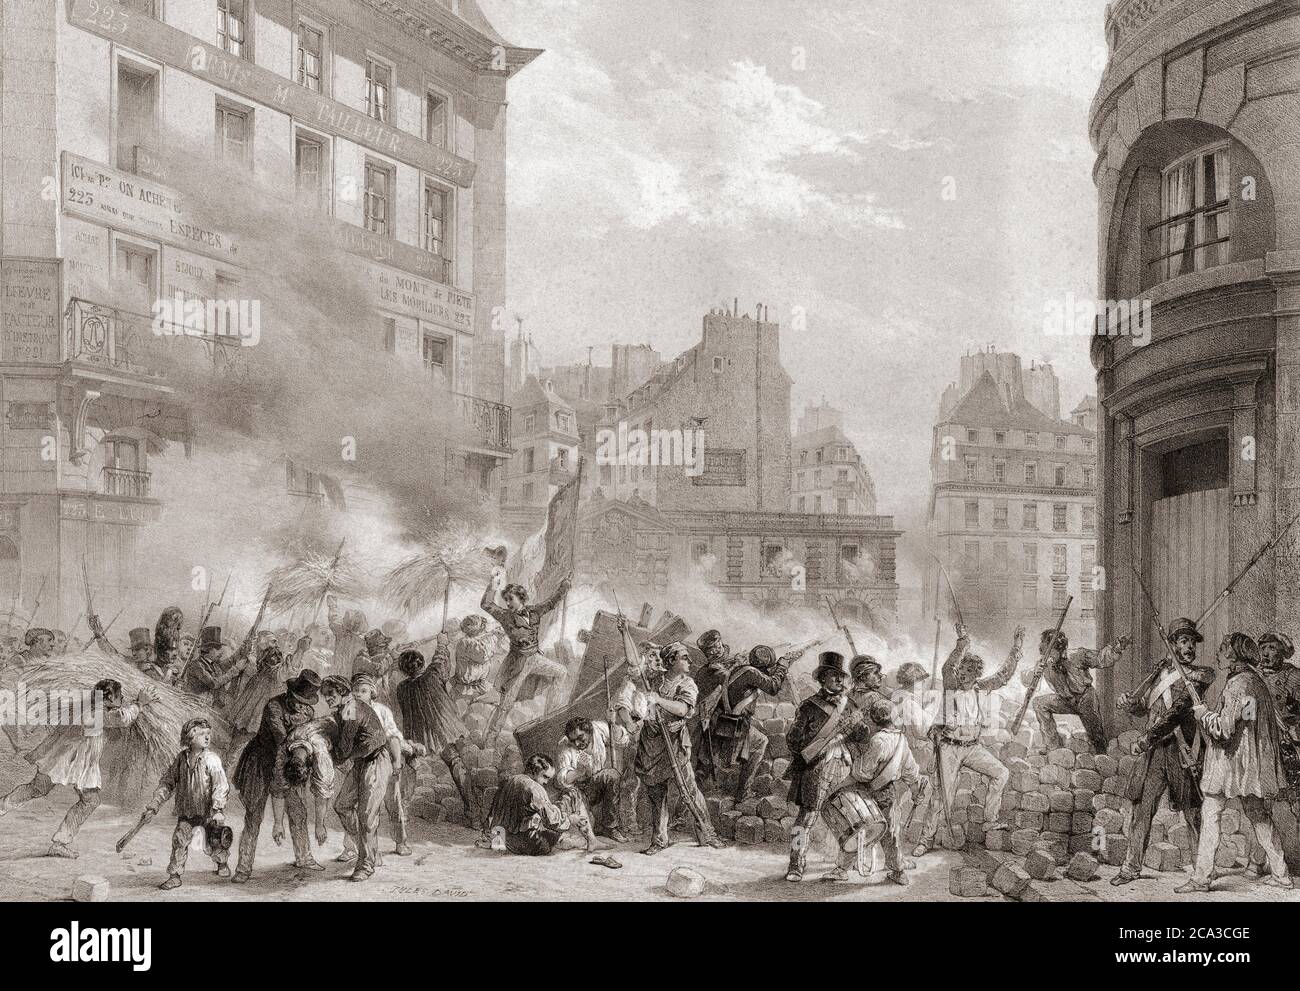 The 1848 Revolution, or February Revolution, France. Revolutionaries